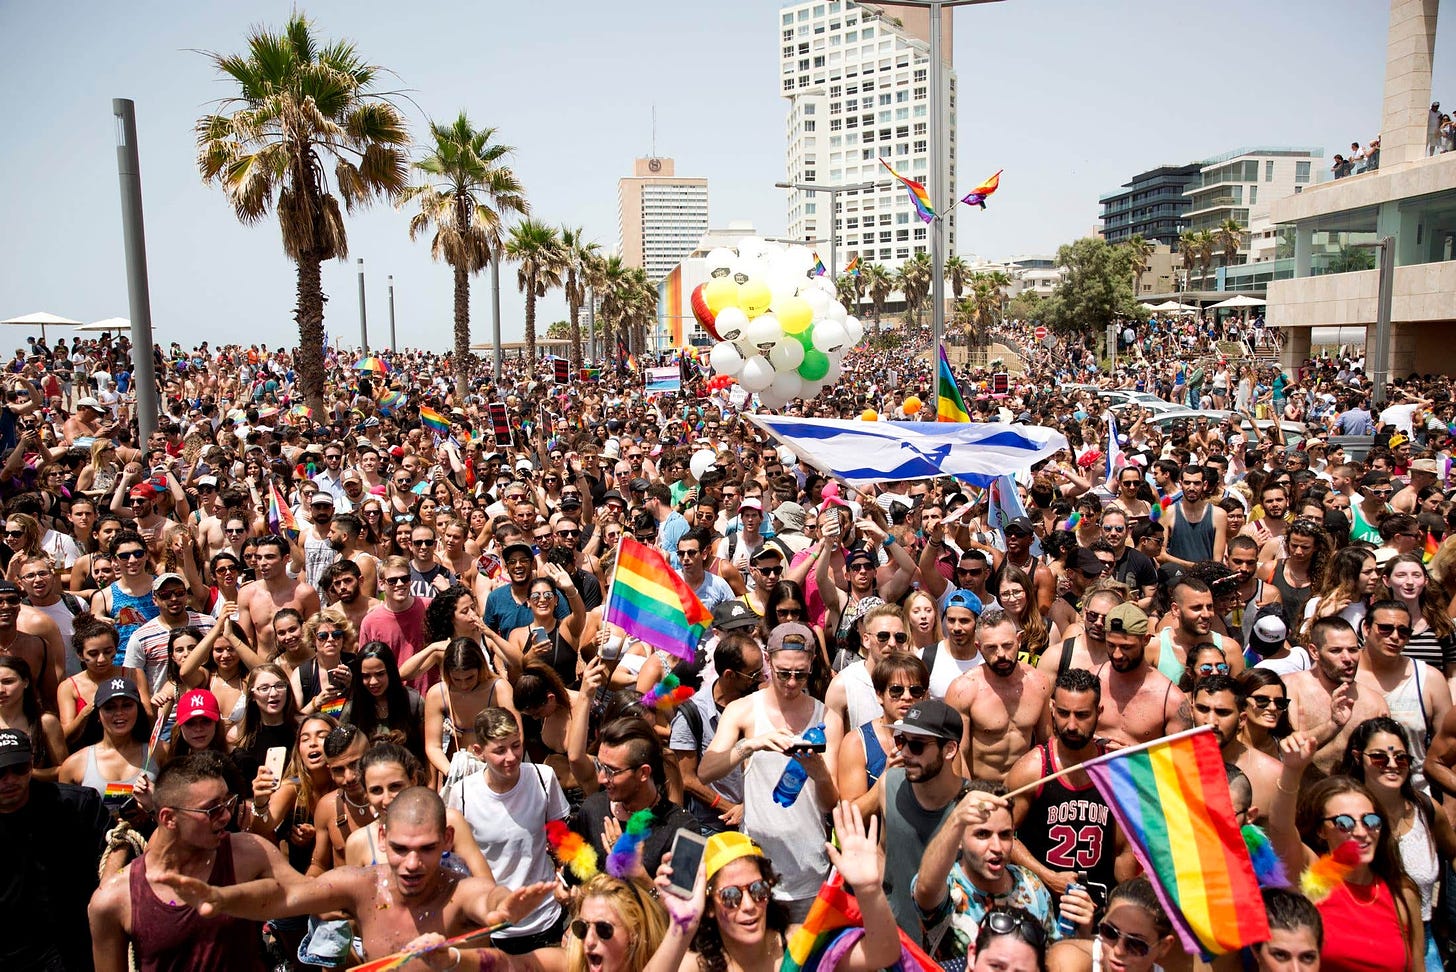 Tel Aviv pride parade 2018: Everything you need to know - Israel News -  Haaretz.com